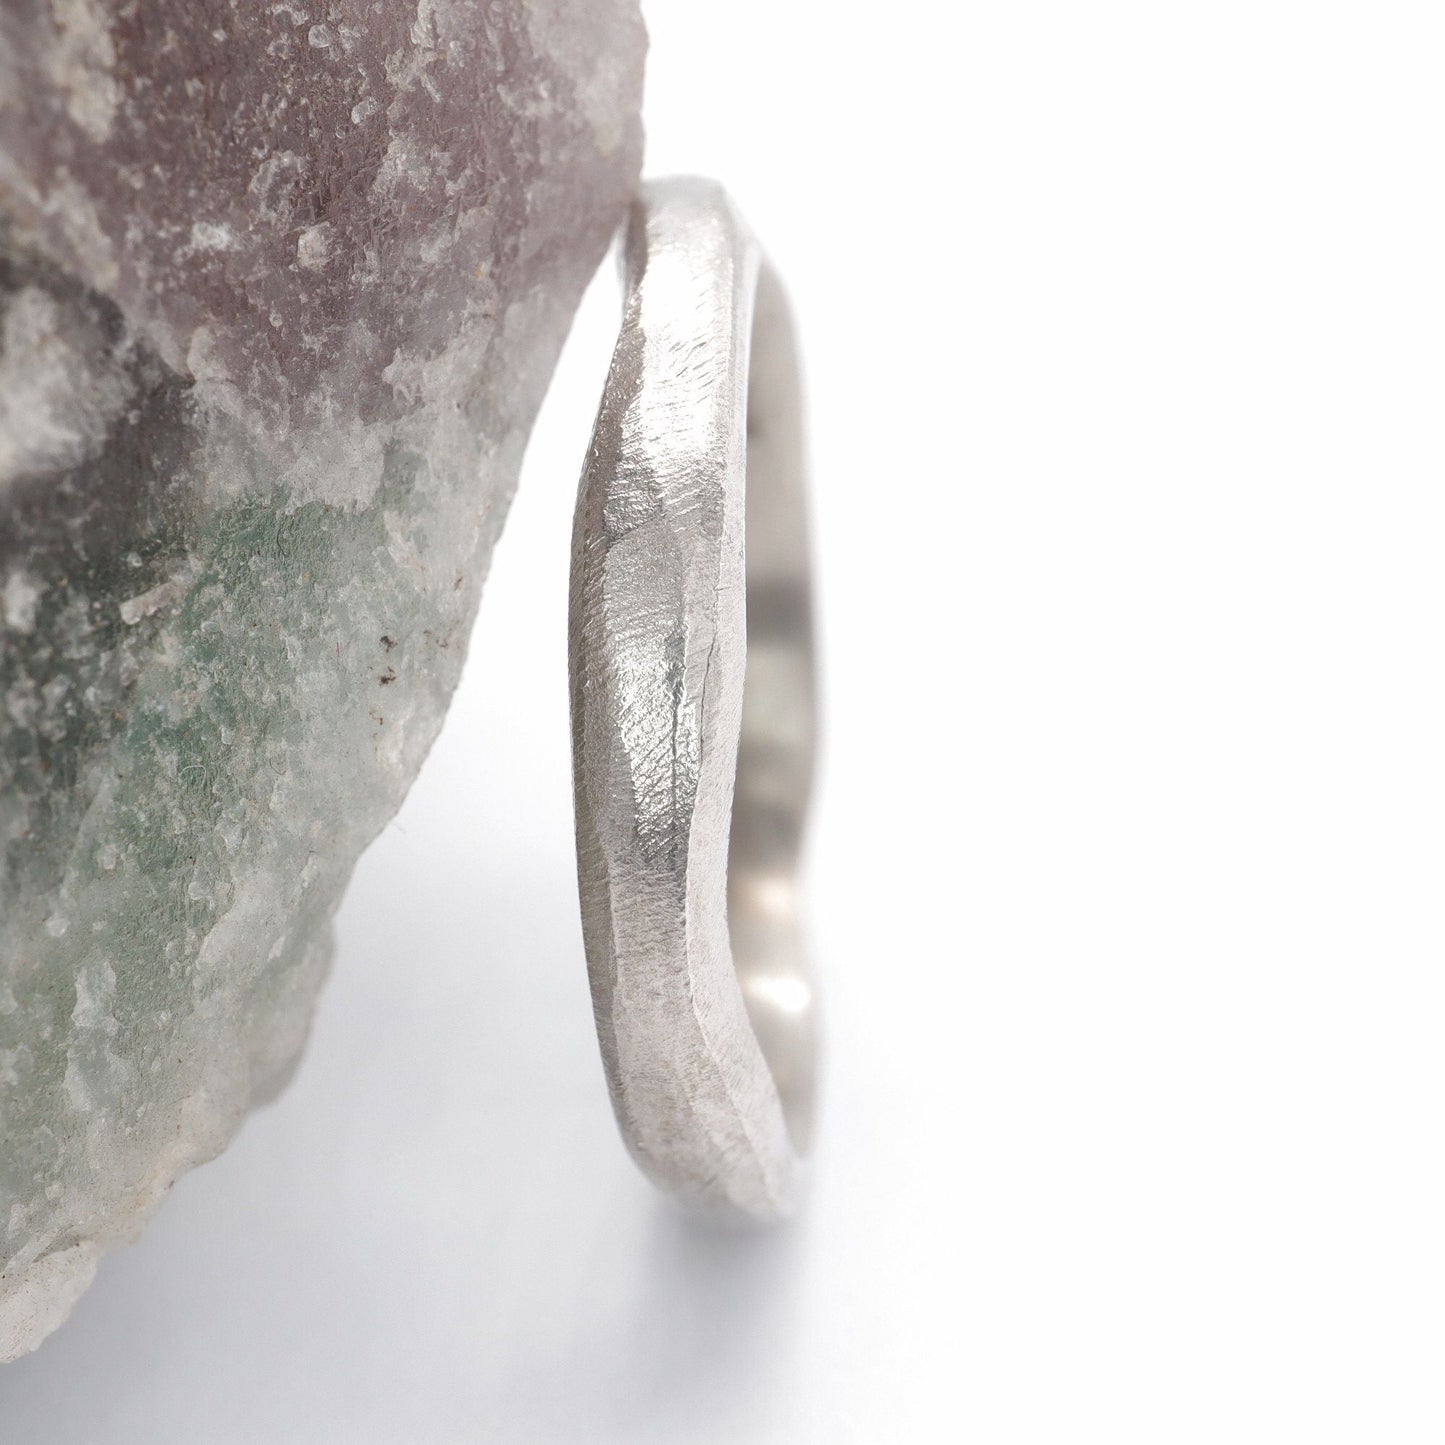 Narrow wedding ring, silver Beach Sand design